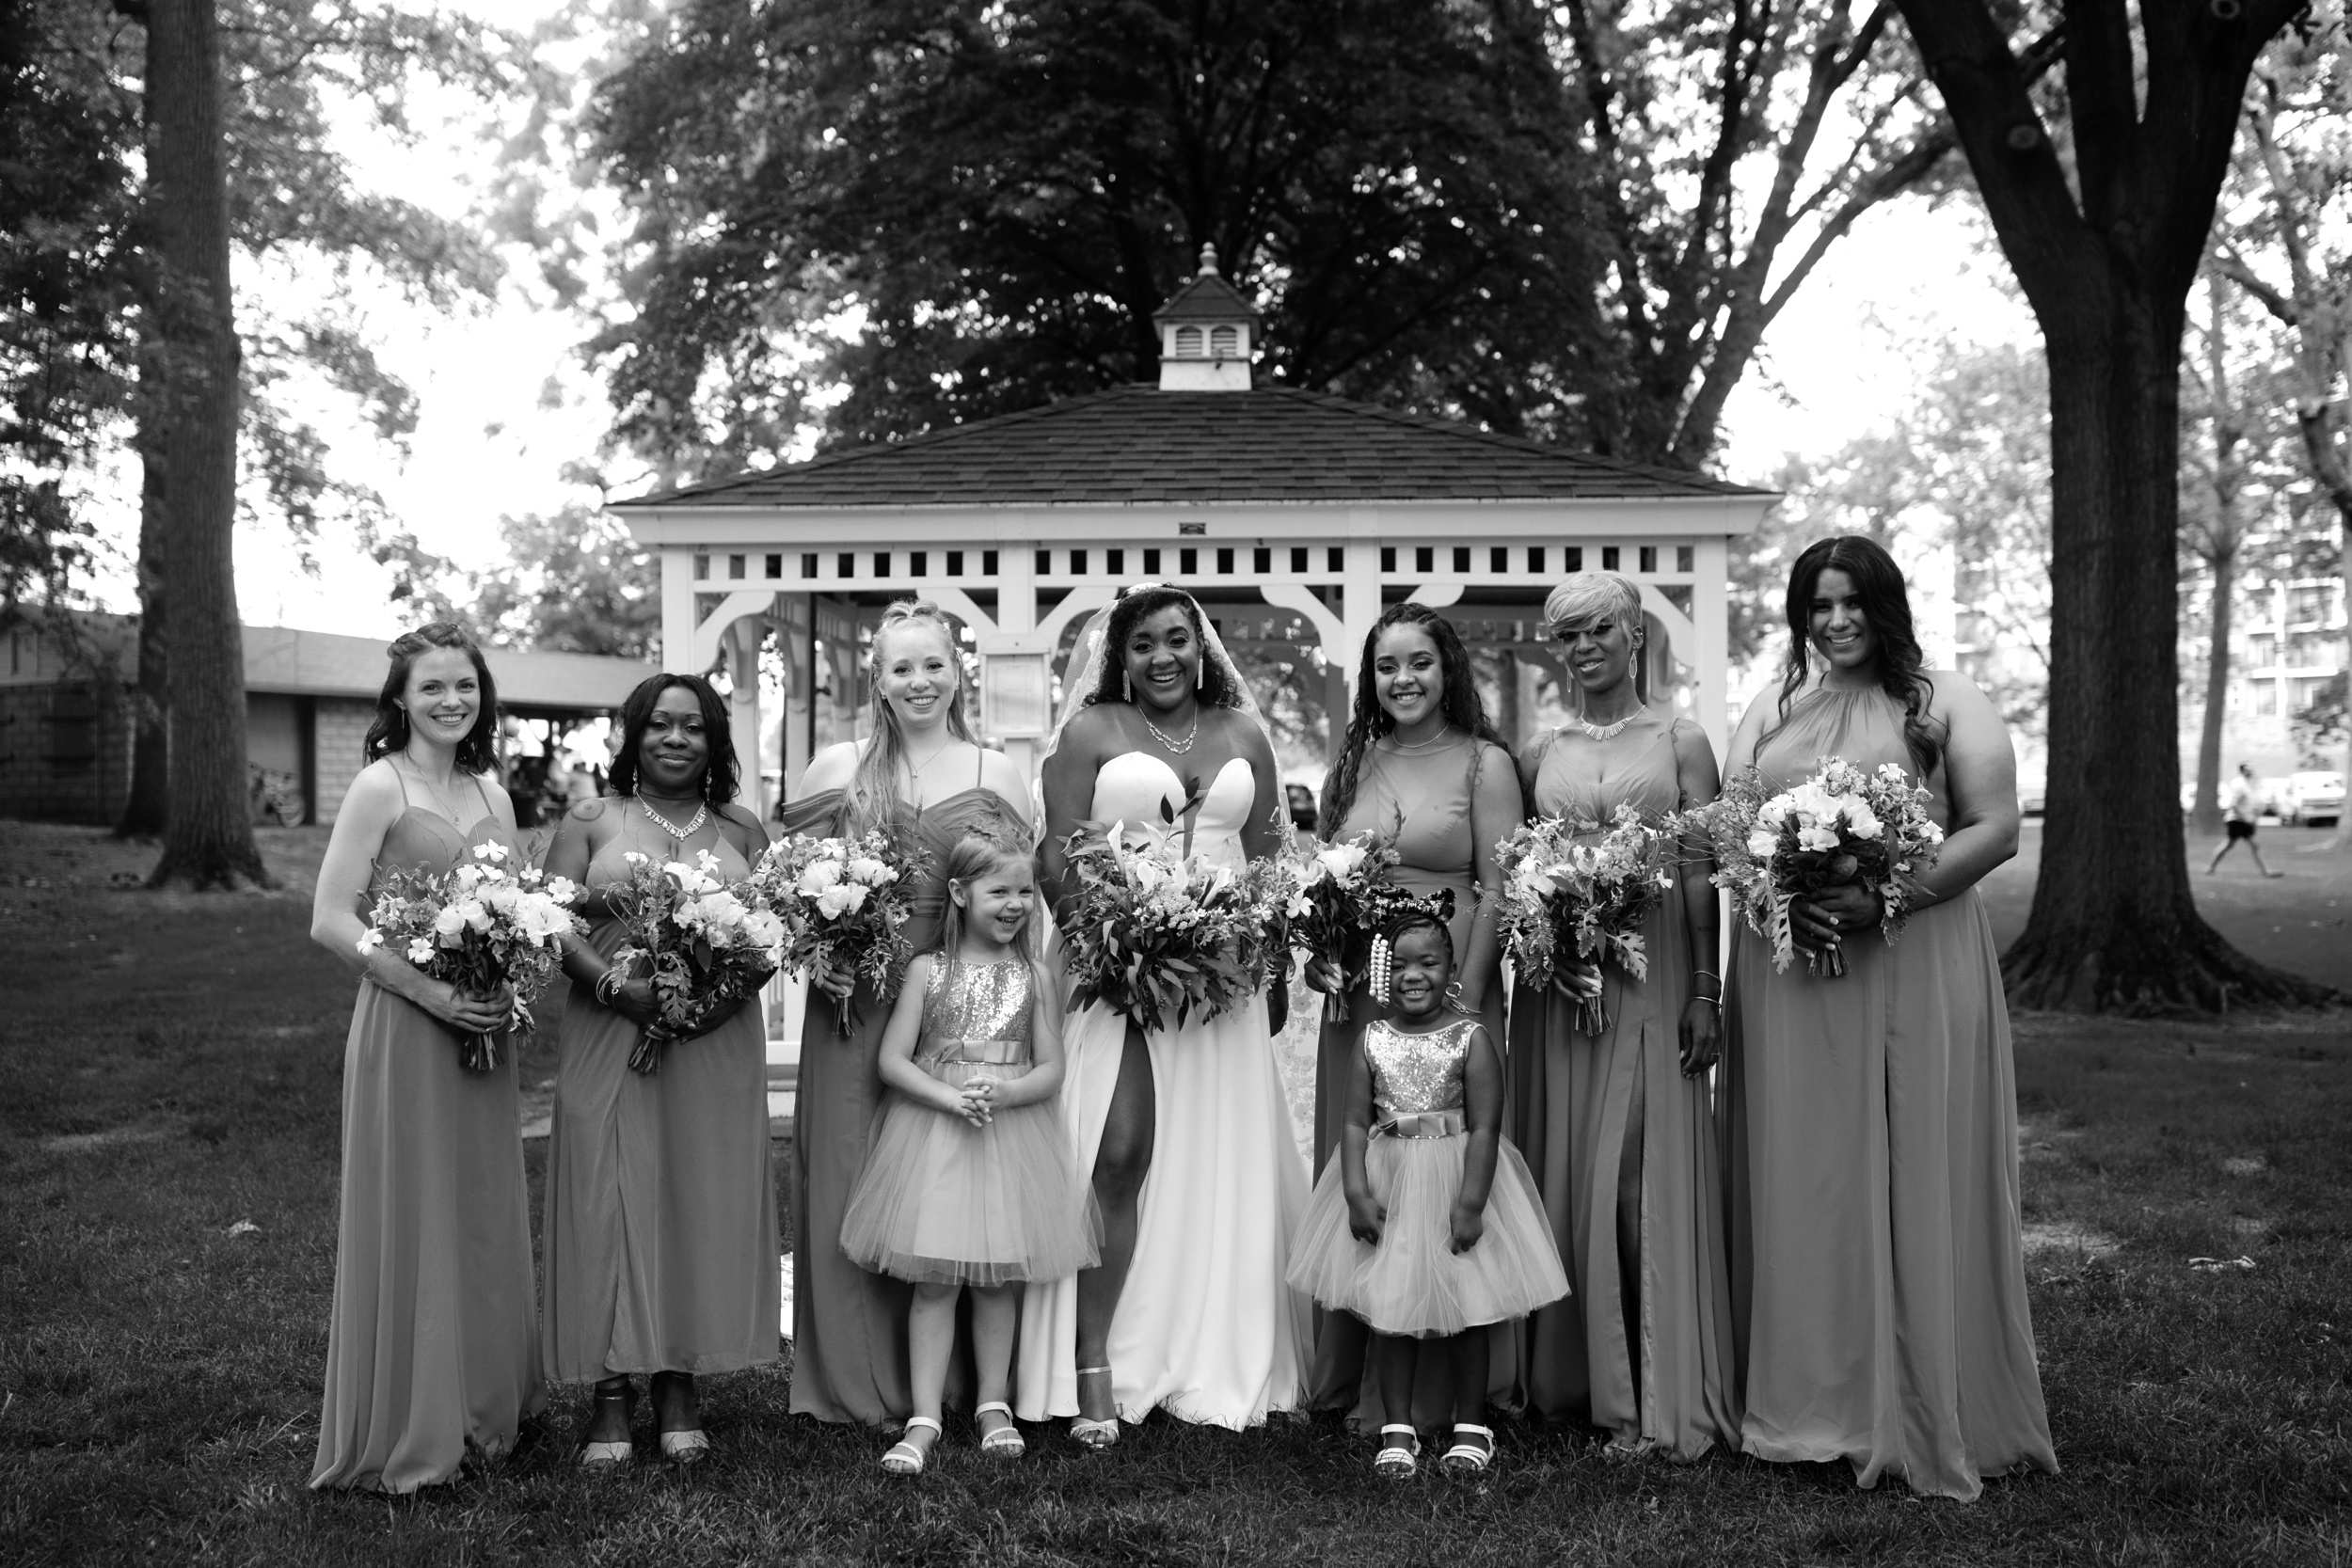 Lititz Spring Park Wedding, Lancaster, PA Wedding Photographer. Charming Small Town Gazebo Wedding 